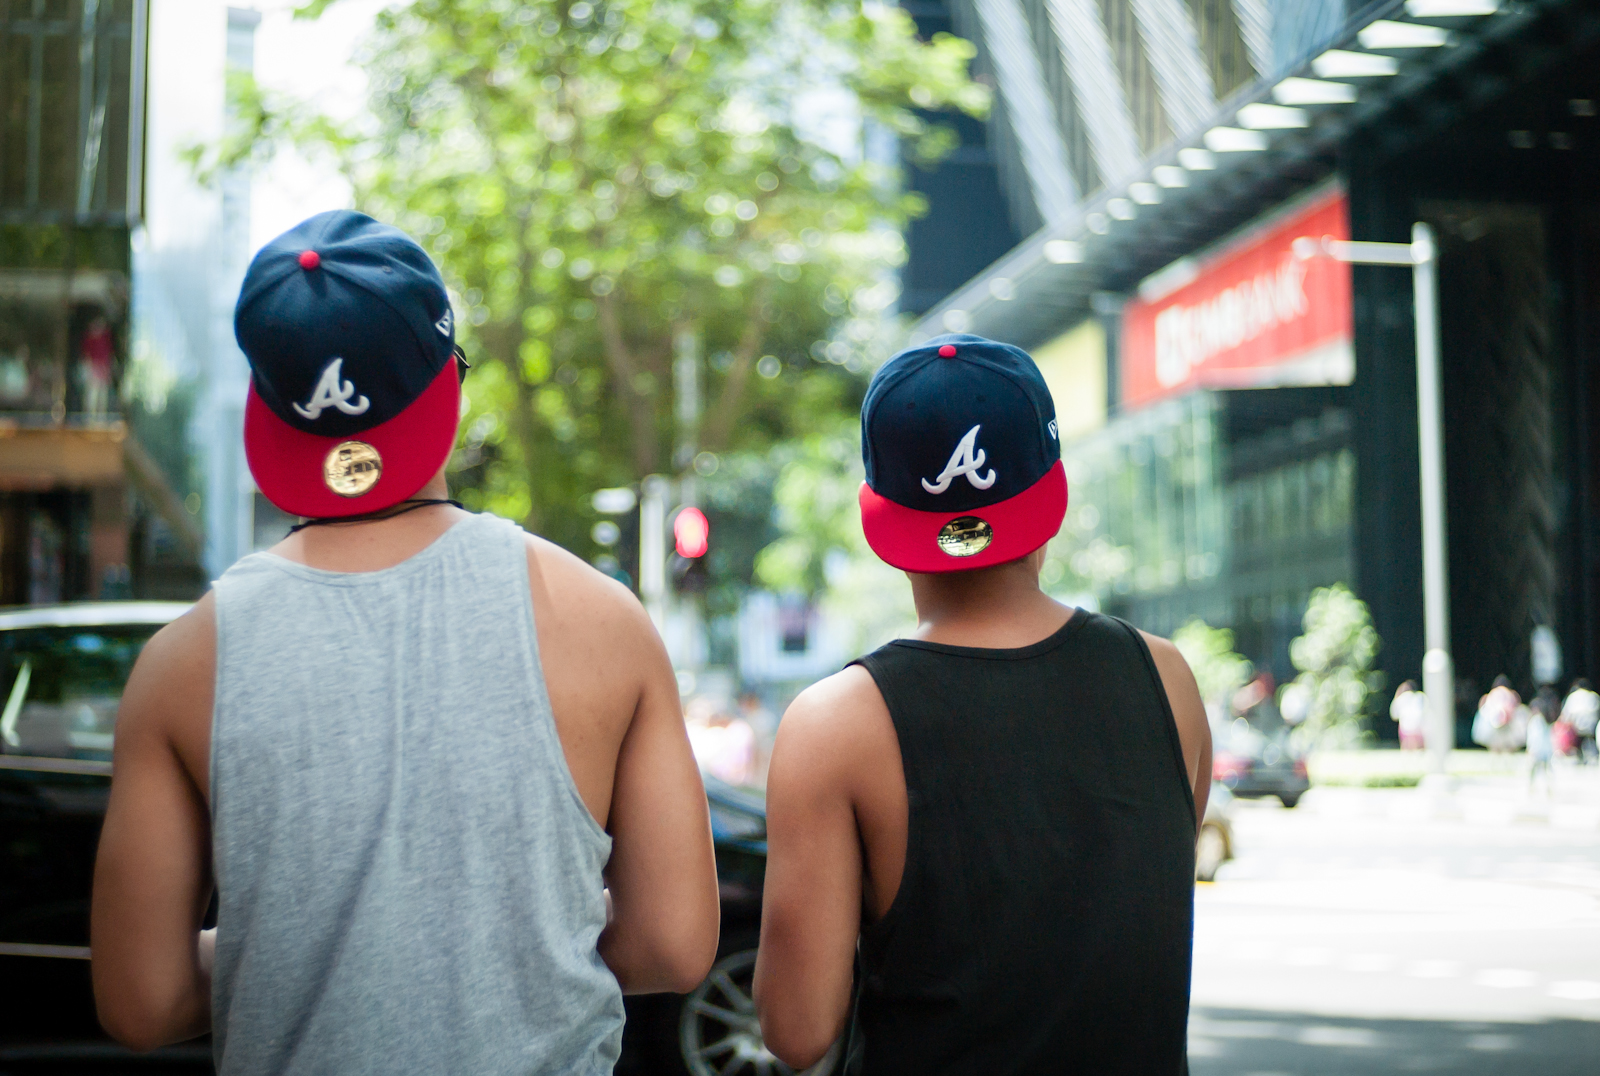 Two men wearing caps